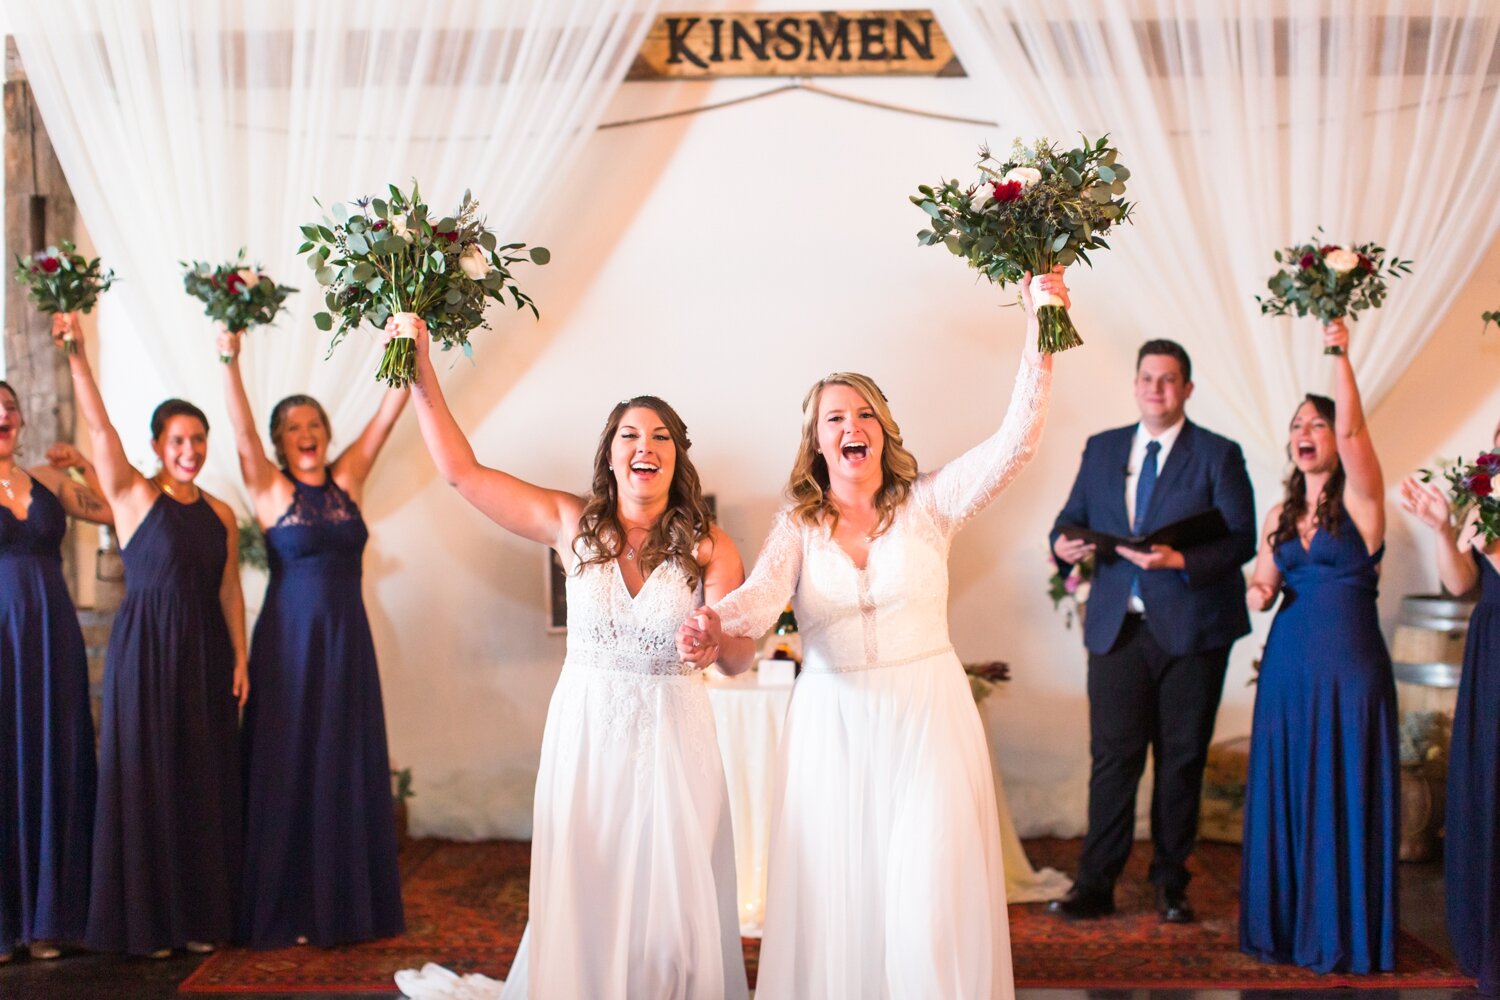 clark-hall-at-kinsmen-brewing-wedding-milldale-connecticut-photographer-shaina-lee-photography-photo